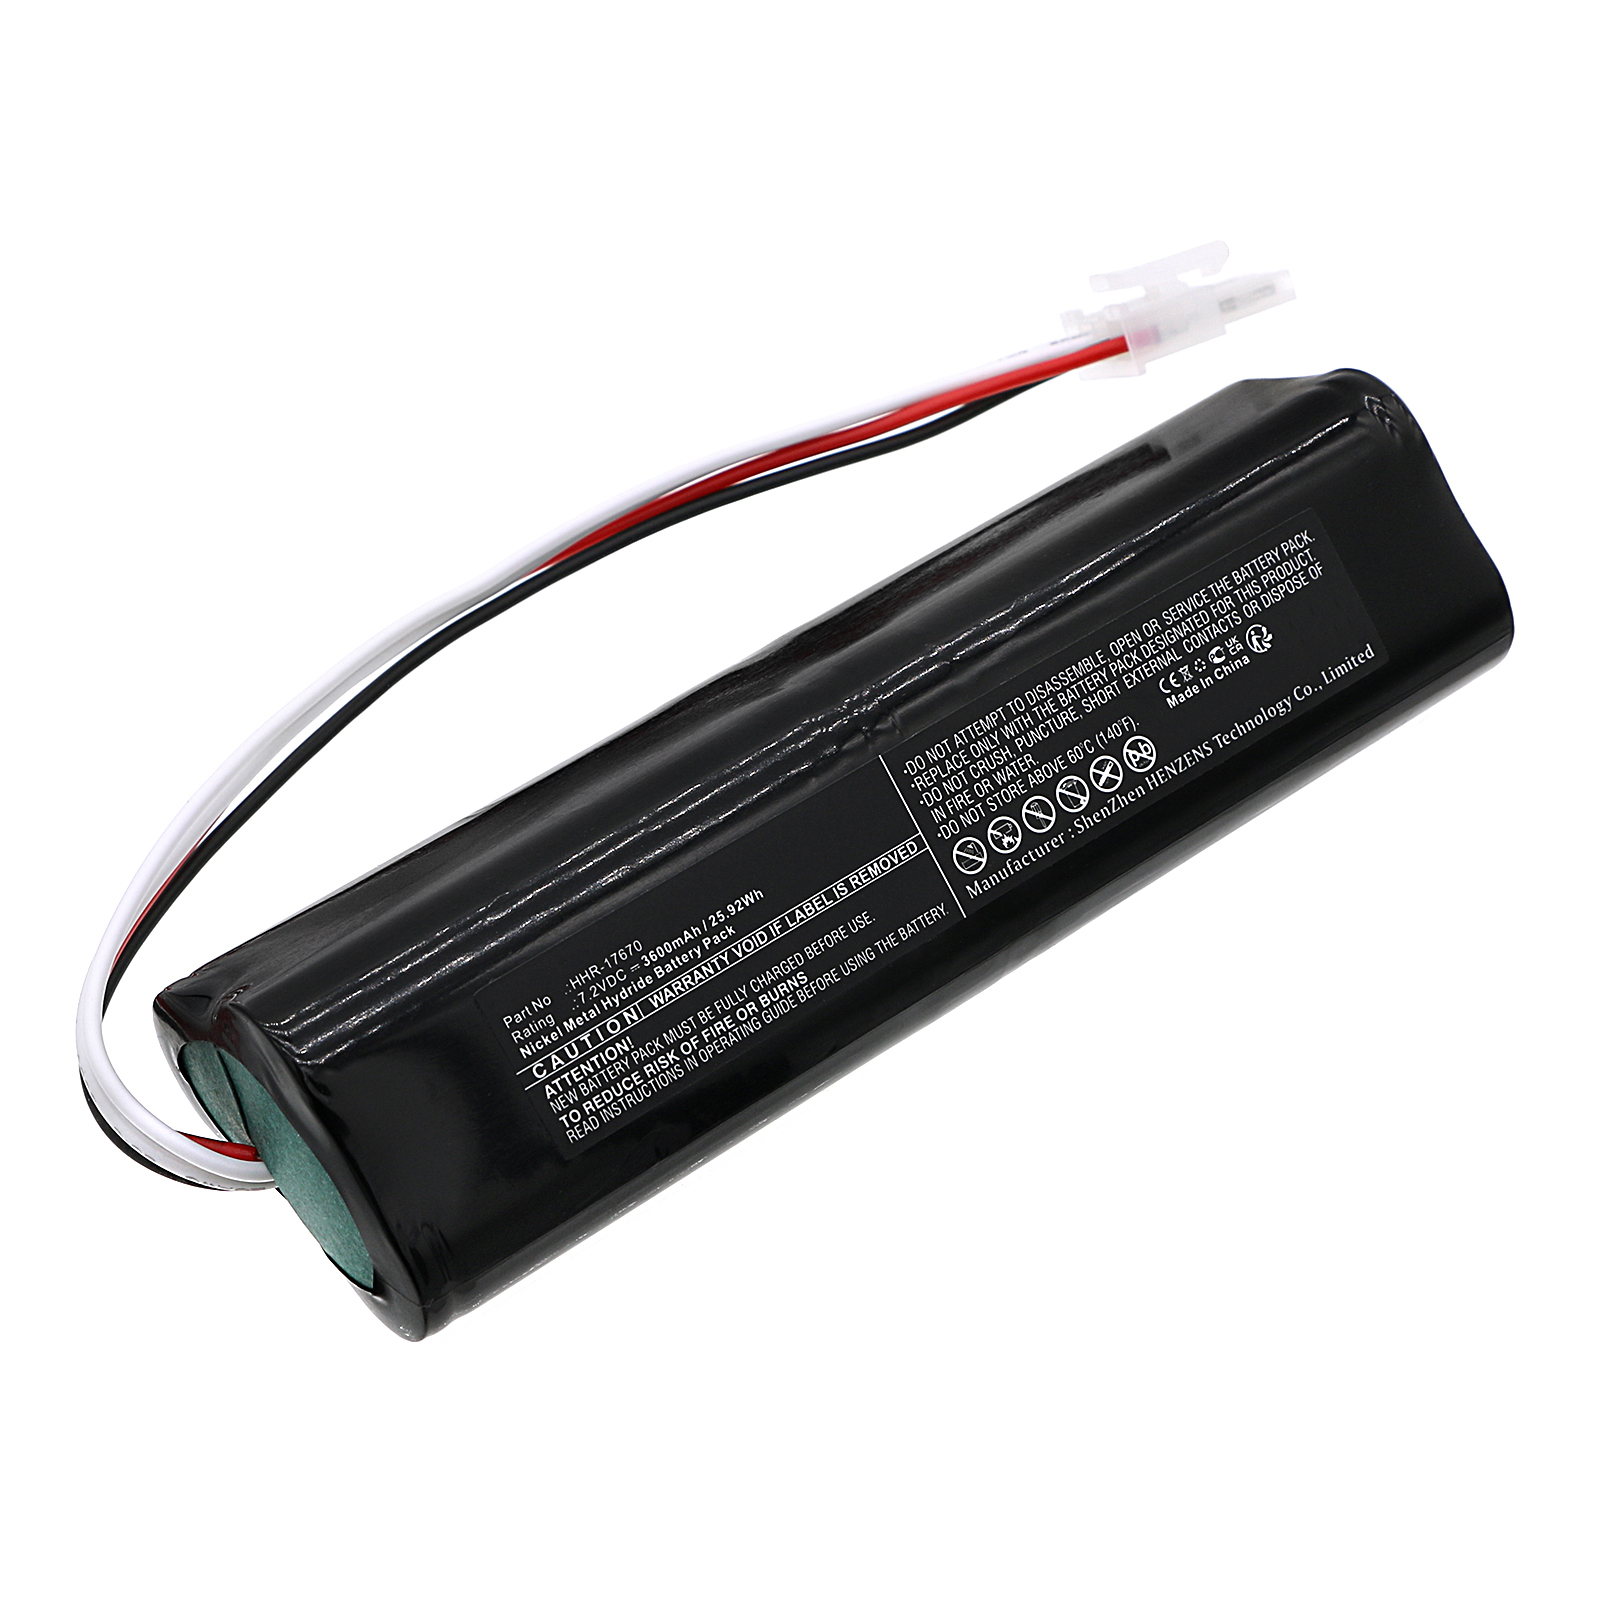 Synergy Digital Equipment Battery, Compatible with Defelsko HHR-17670 Equipment Battery (Ni-MH, 7.2V, 3600mAh)